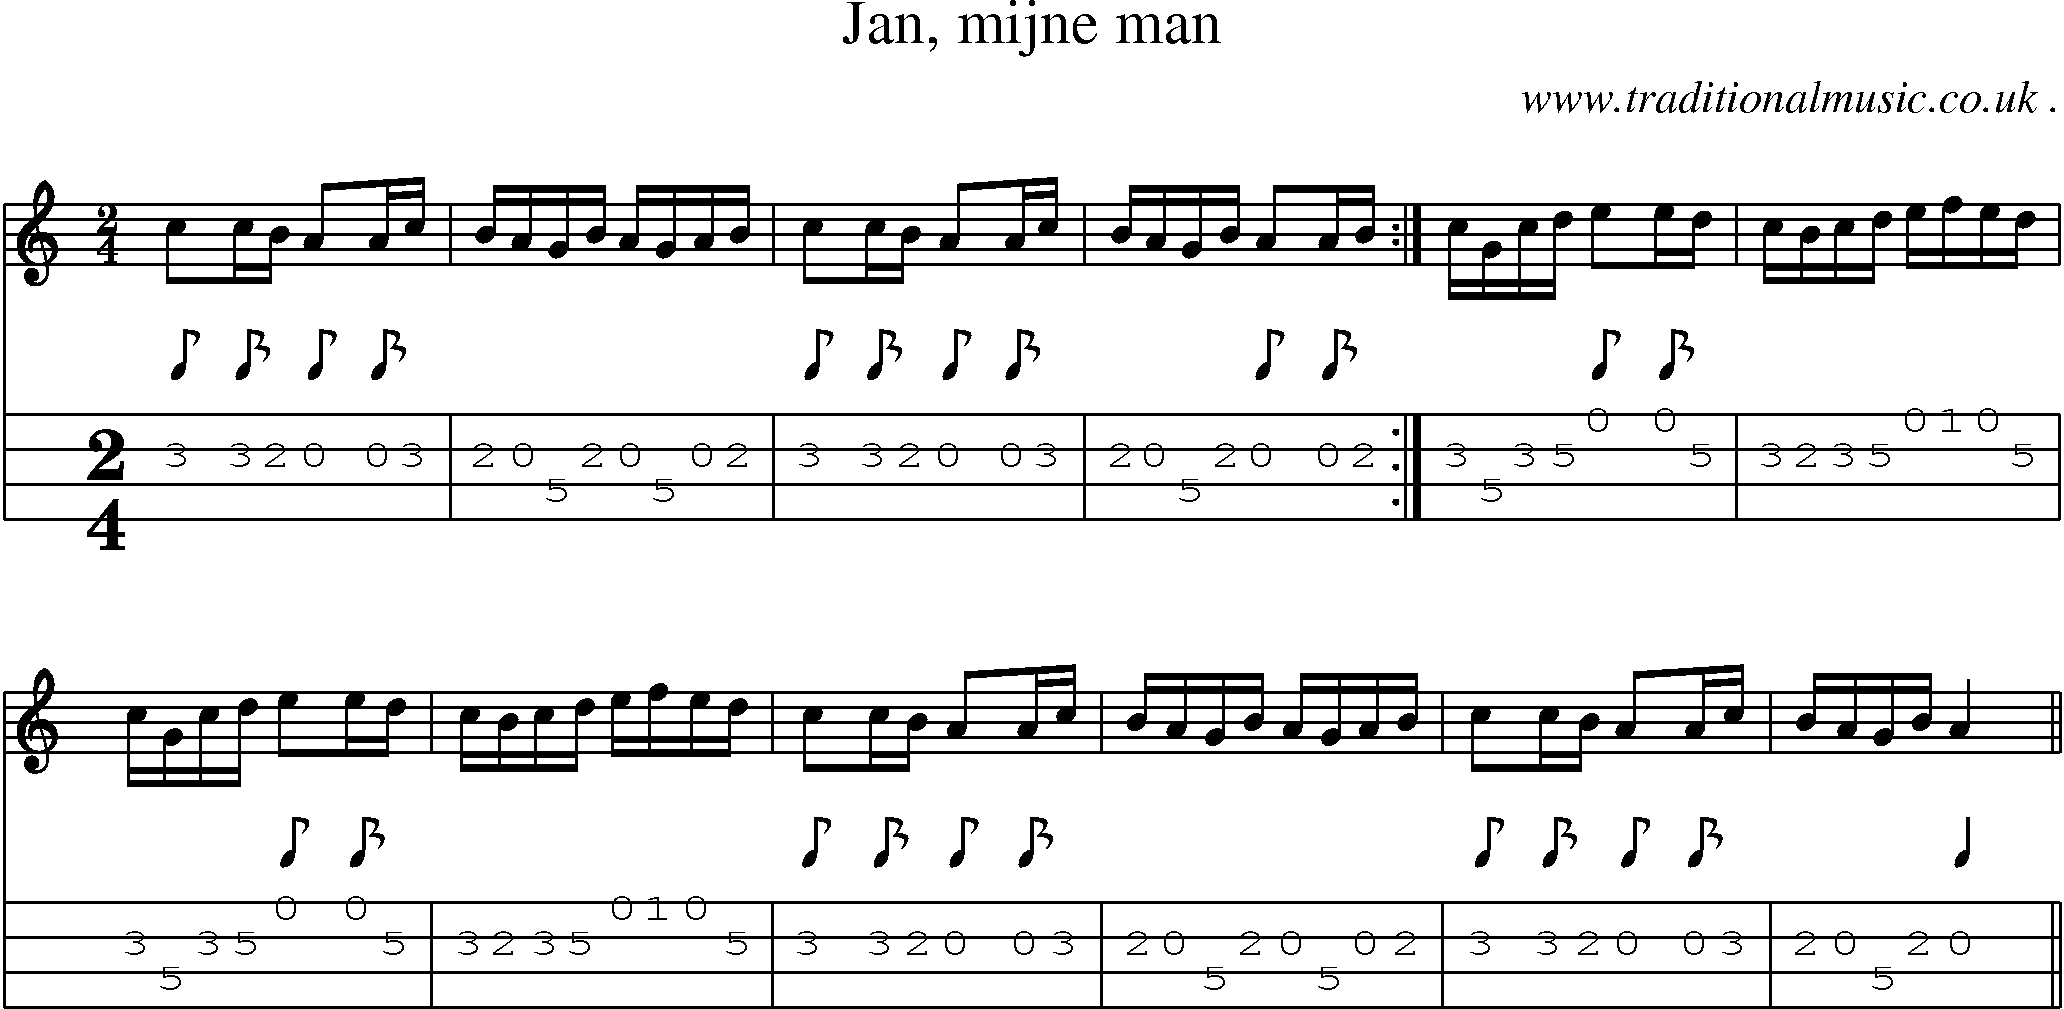 Sheet-Music and Mandolin Tabs for Jan Mijne Man